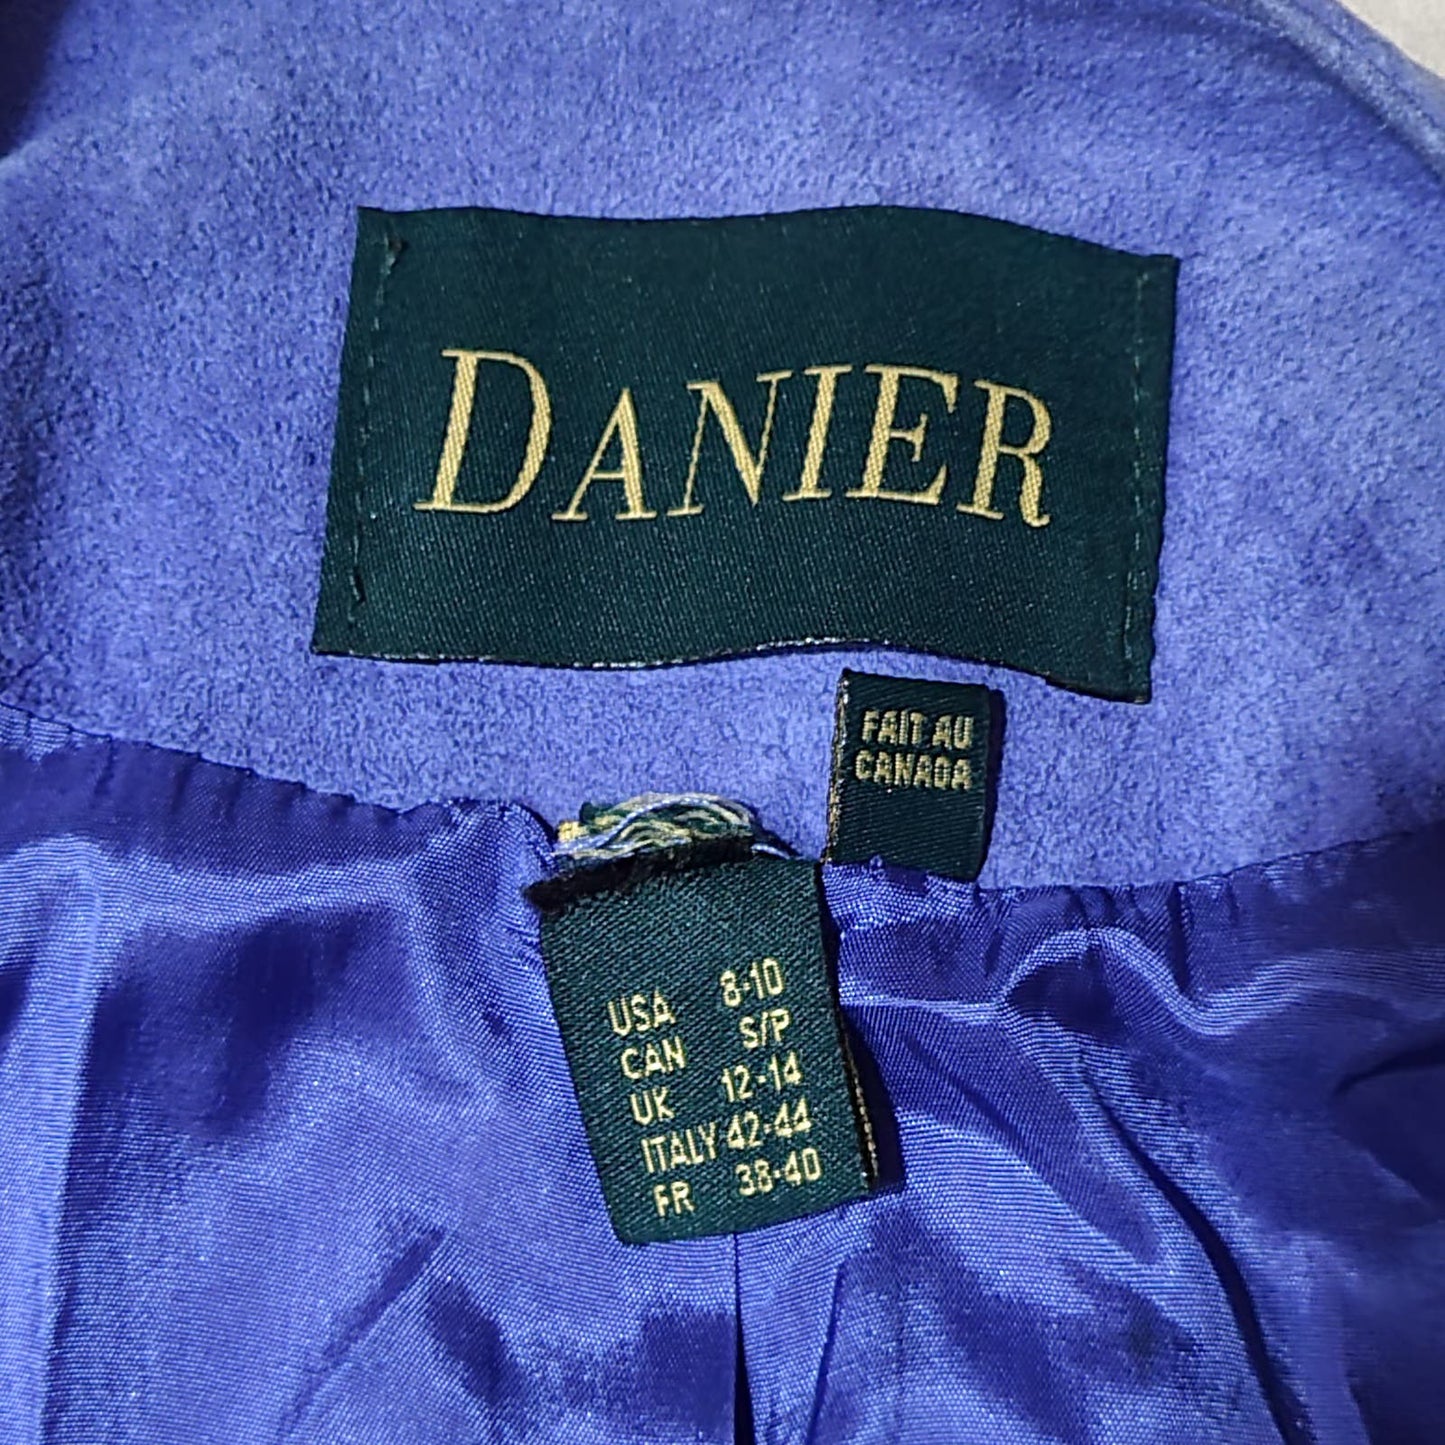 Vintage Danier Blue Leather Jacket - Size Small